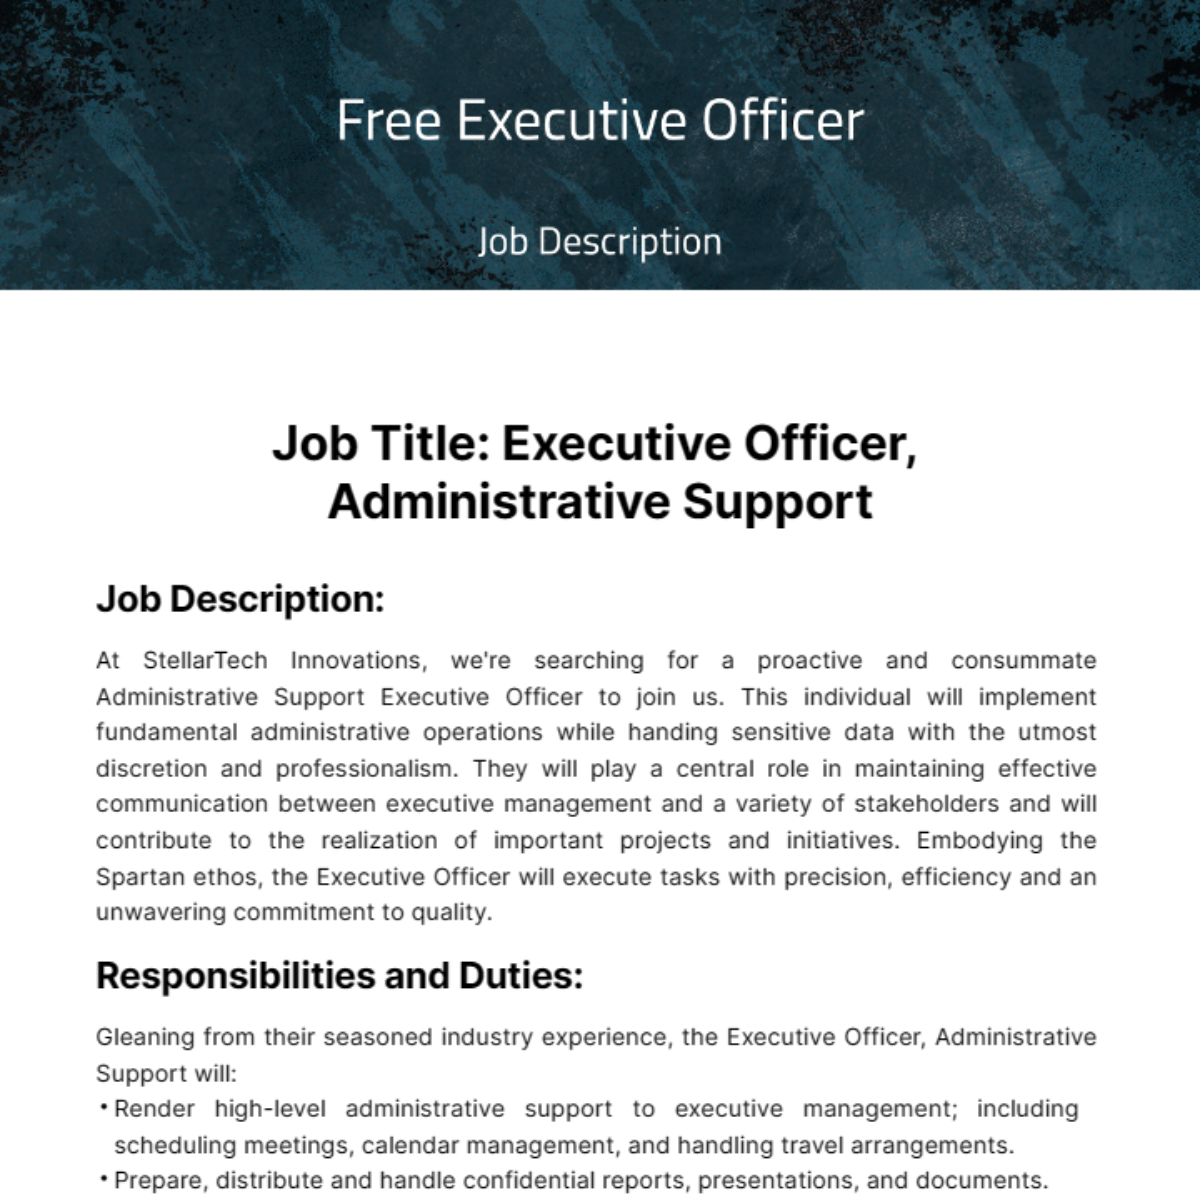 Executive Officer Job Description Edit Online 